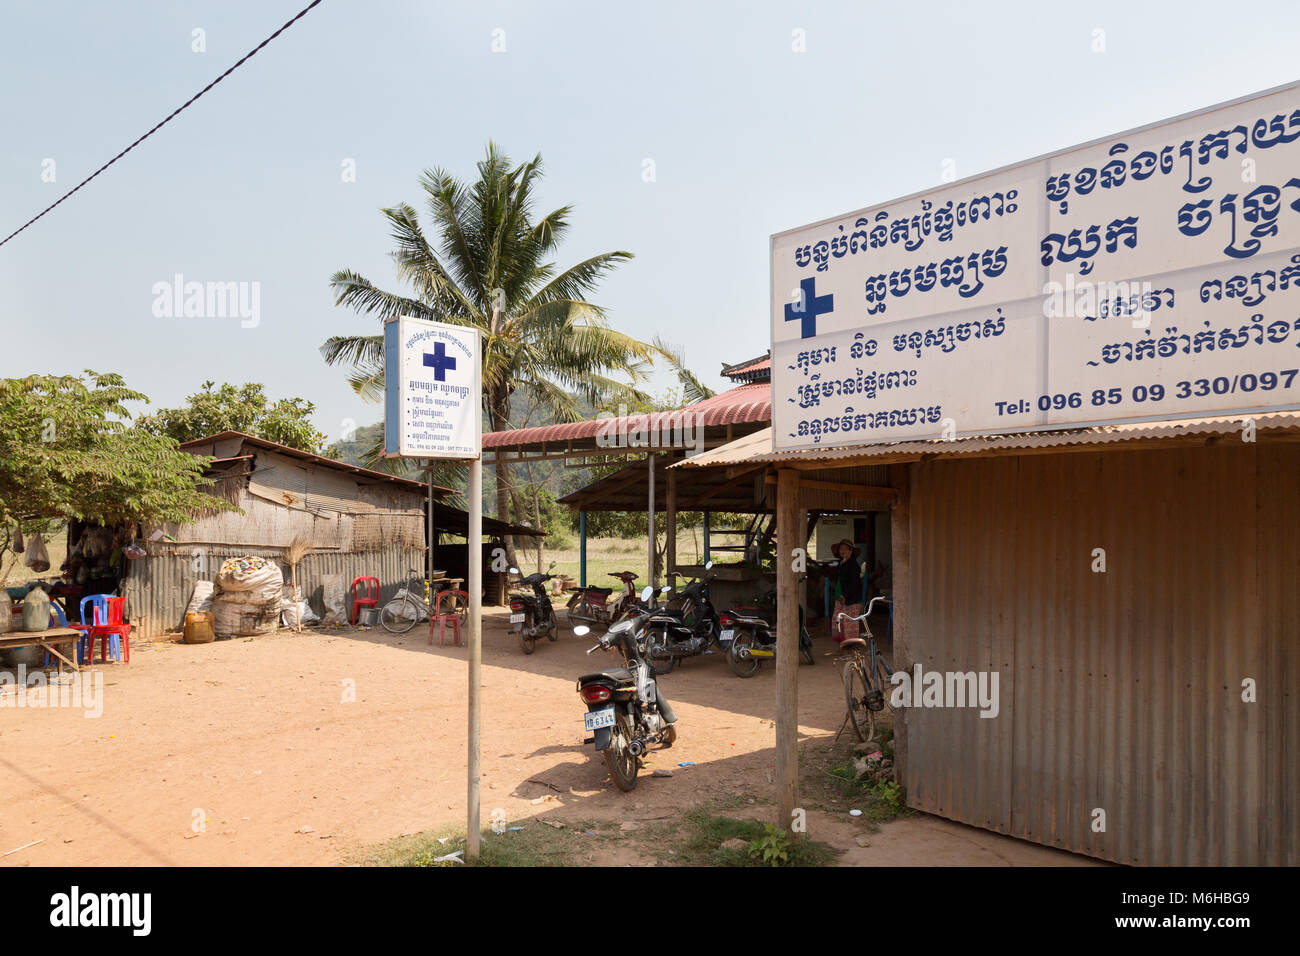 Cambodia health - a rural health clinic, Angkor Borei, Cambodia, Asia Stock Photo